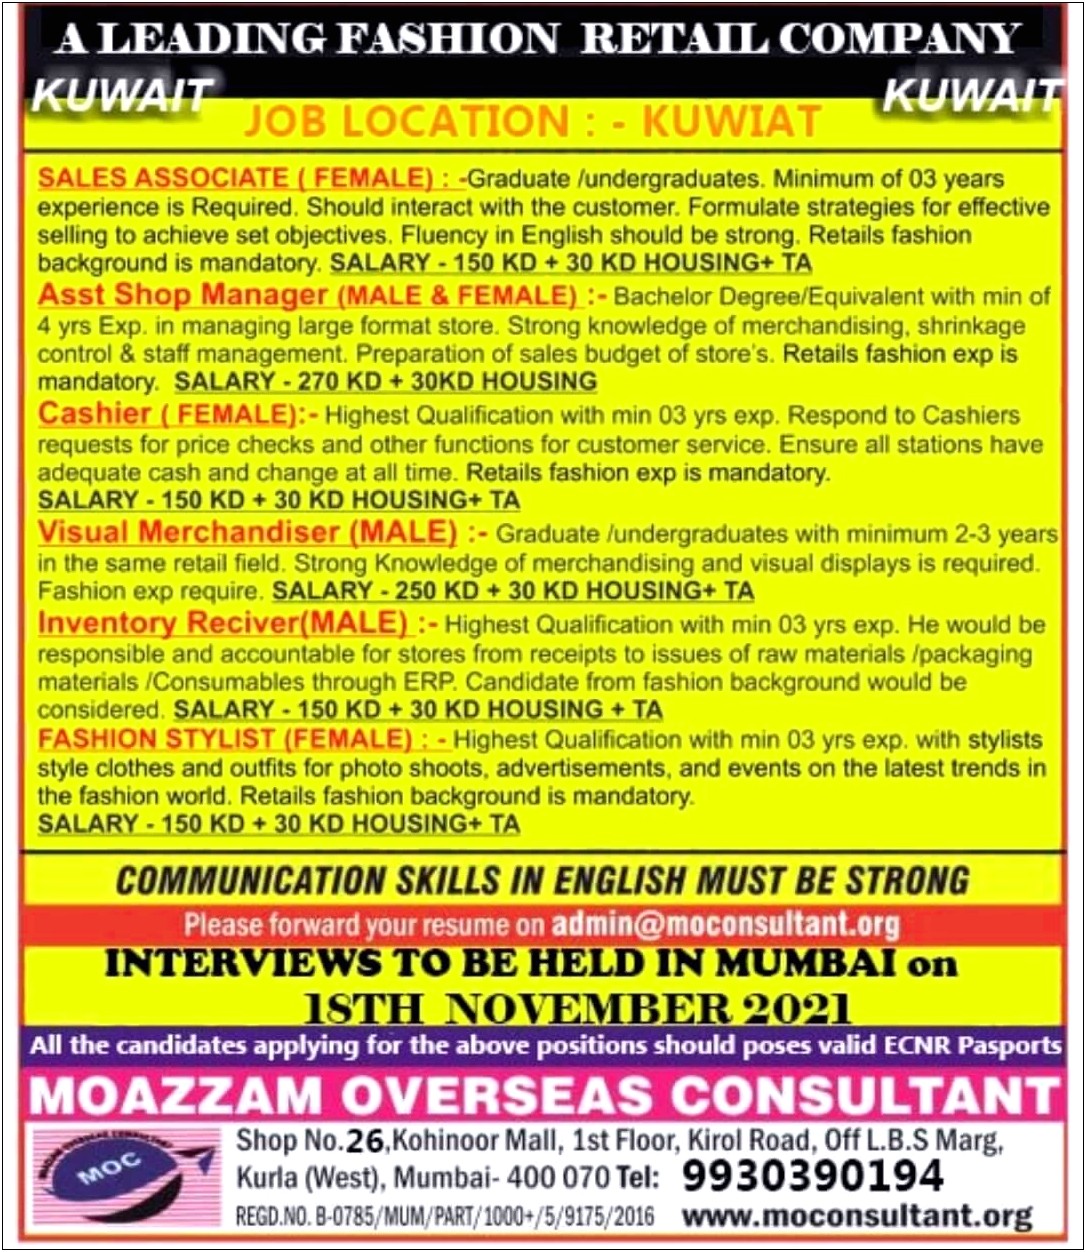 Upload Resume For Job In Mumbai